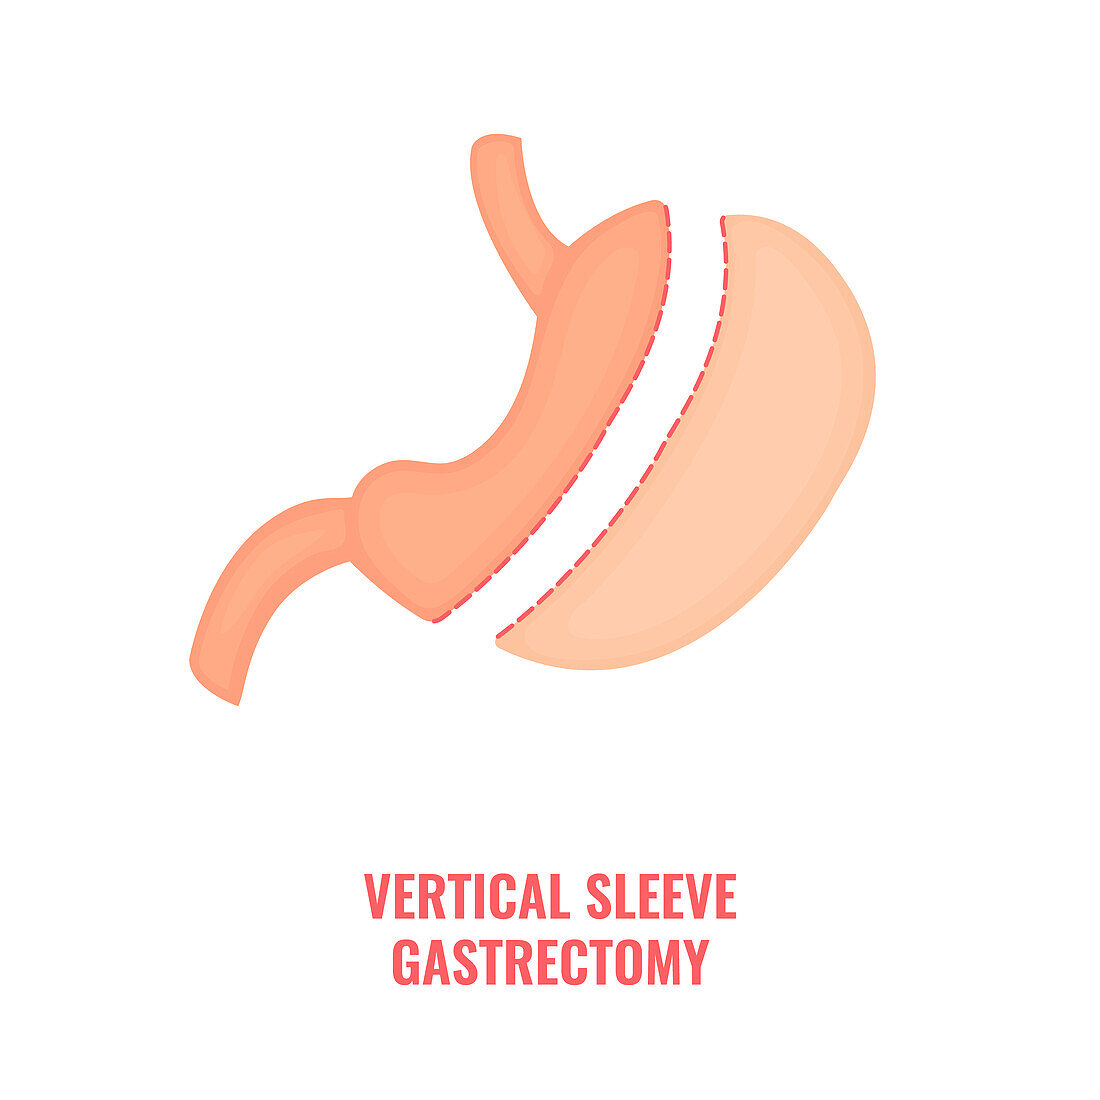 Vertical sleeve gastrectomy, illustration